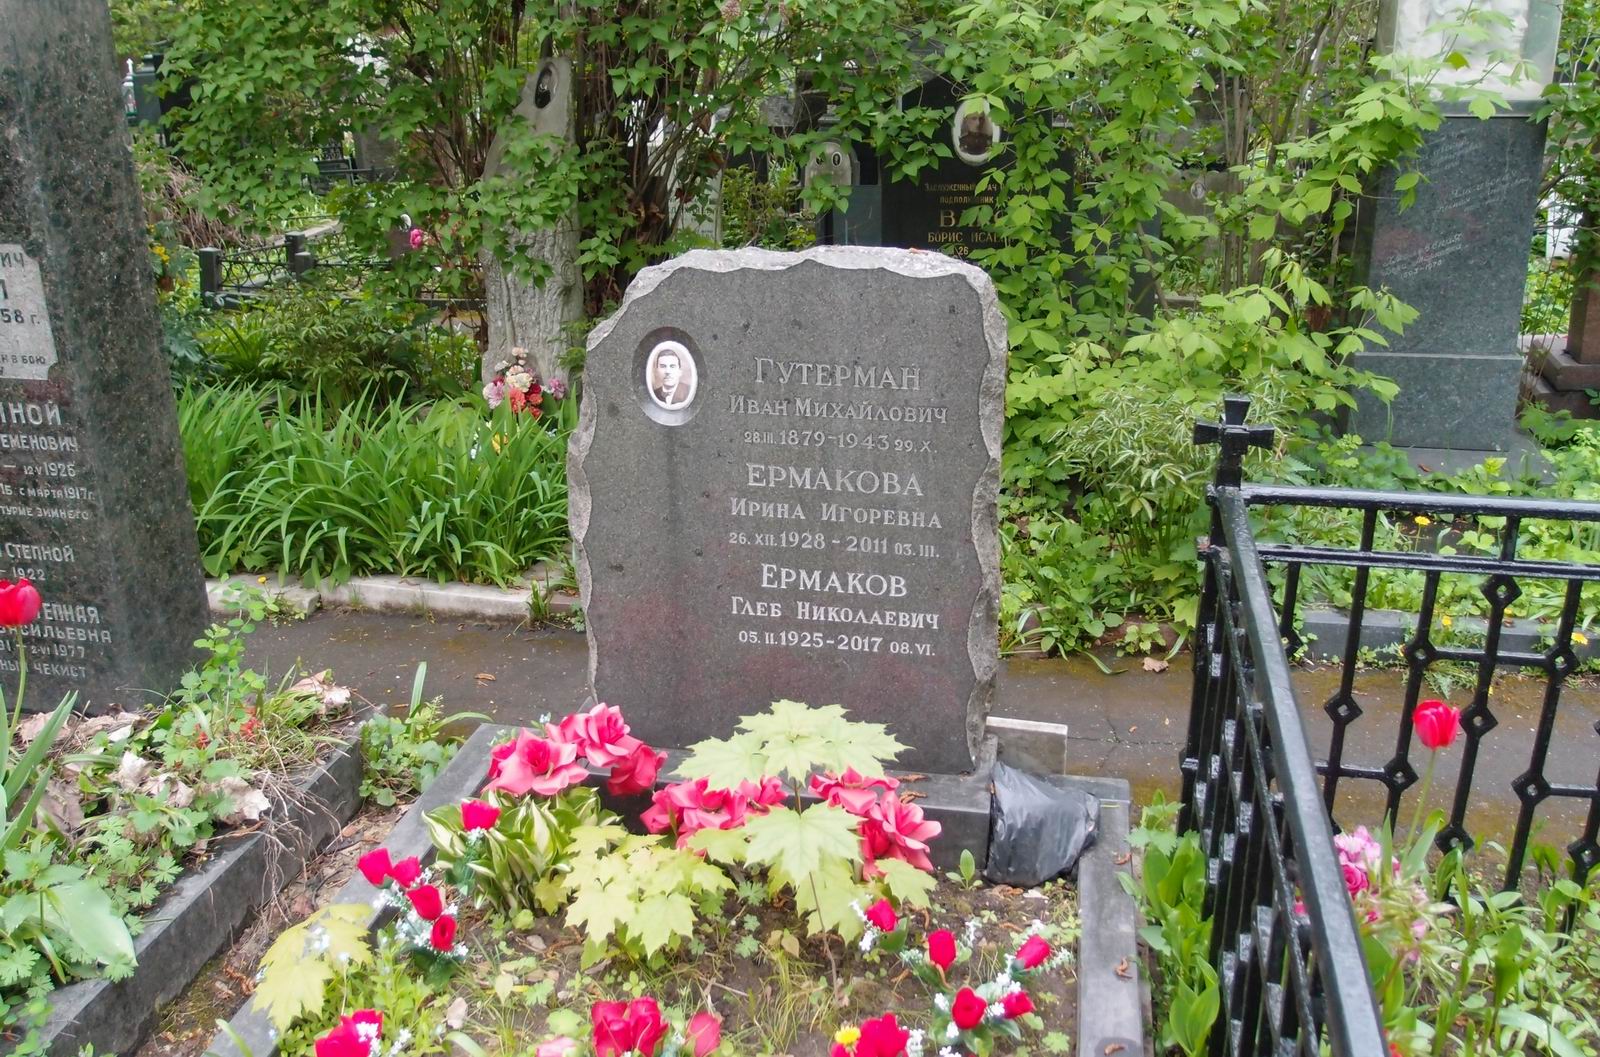 Памятник на могиле Гутермана И.М. (1879-1943), на Новодевичьем кладбище (4-30-6).